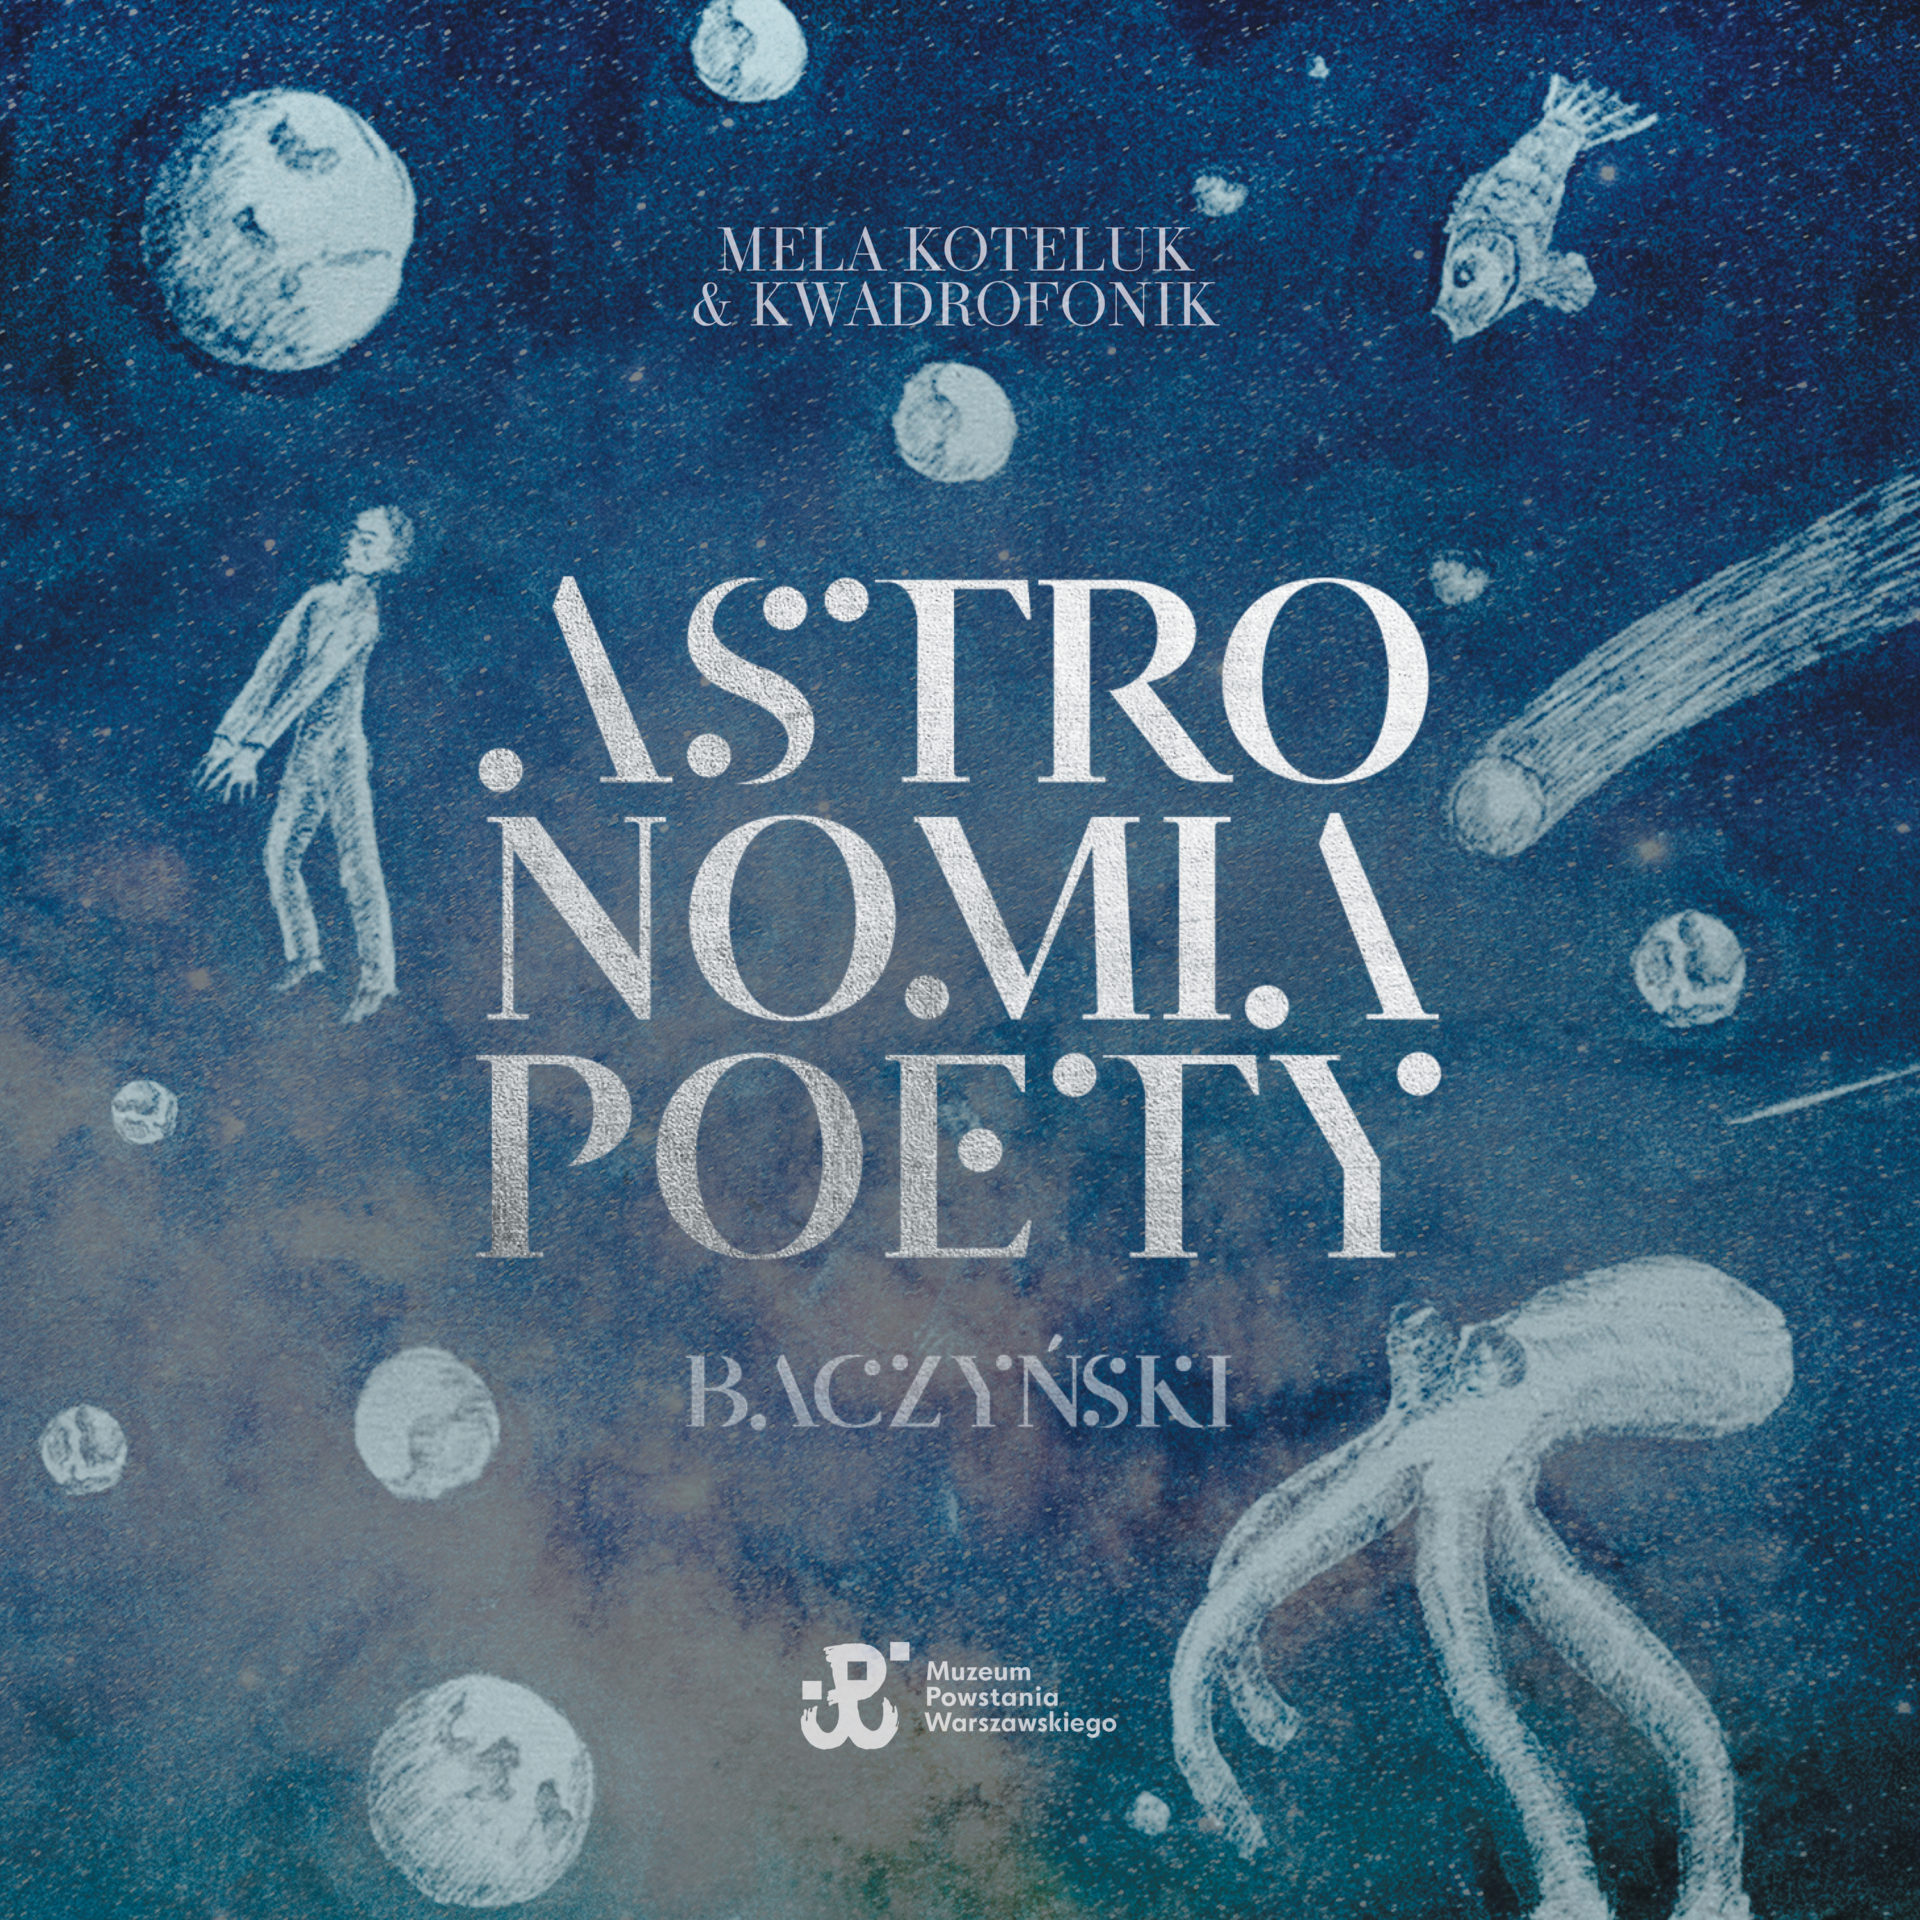 Mela Koteluk Kwadrofonik - Astronomia poety. Baczyński 